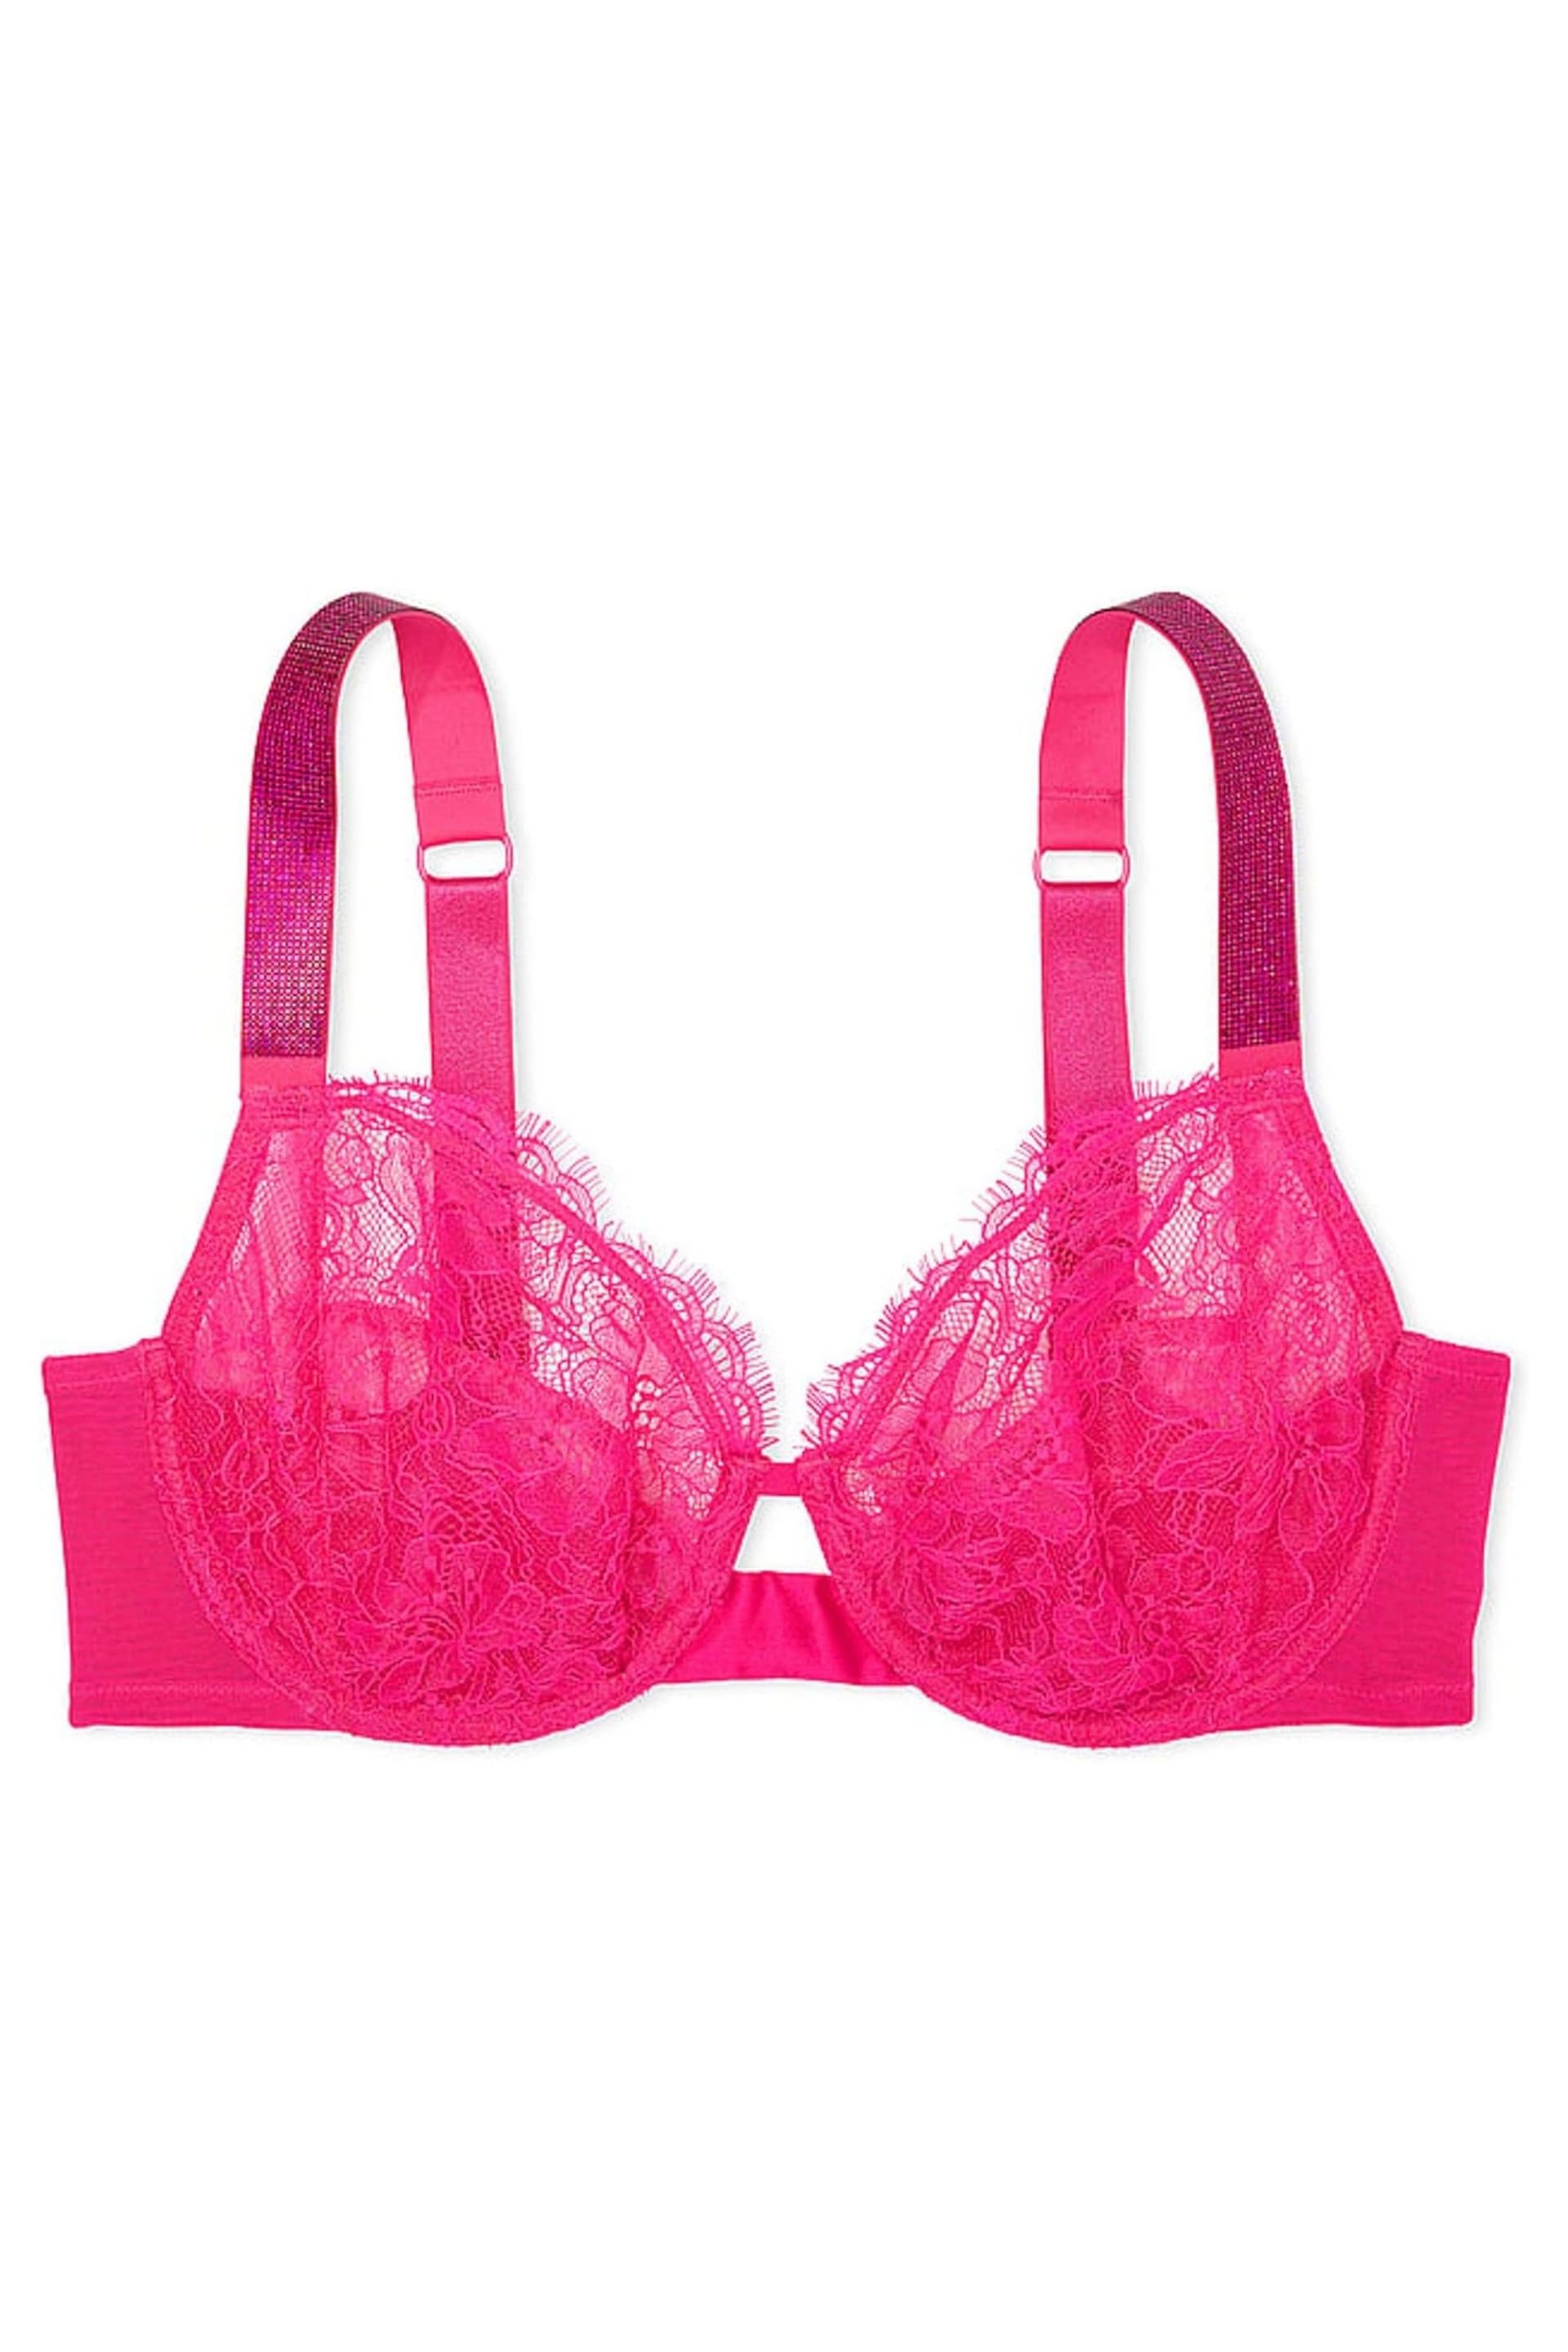 Victoria's Secret Forever Pink Shine Strap Monogram Demi Bra - Image 3 of 4